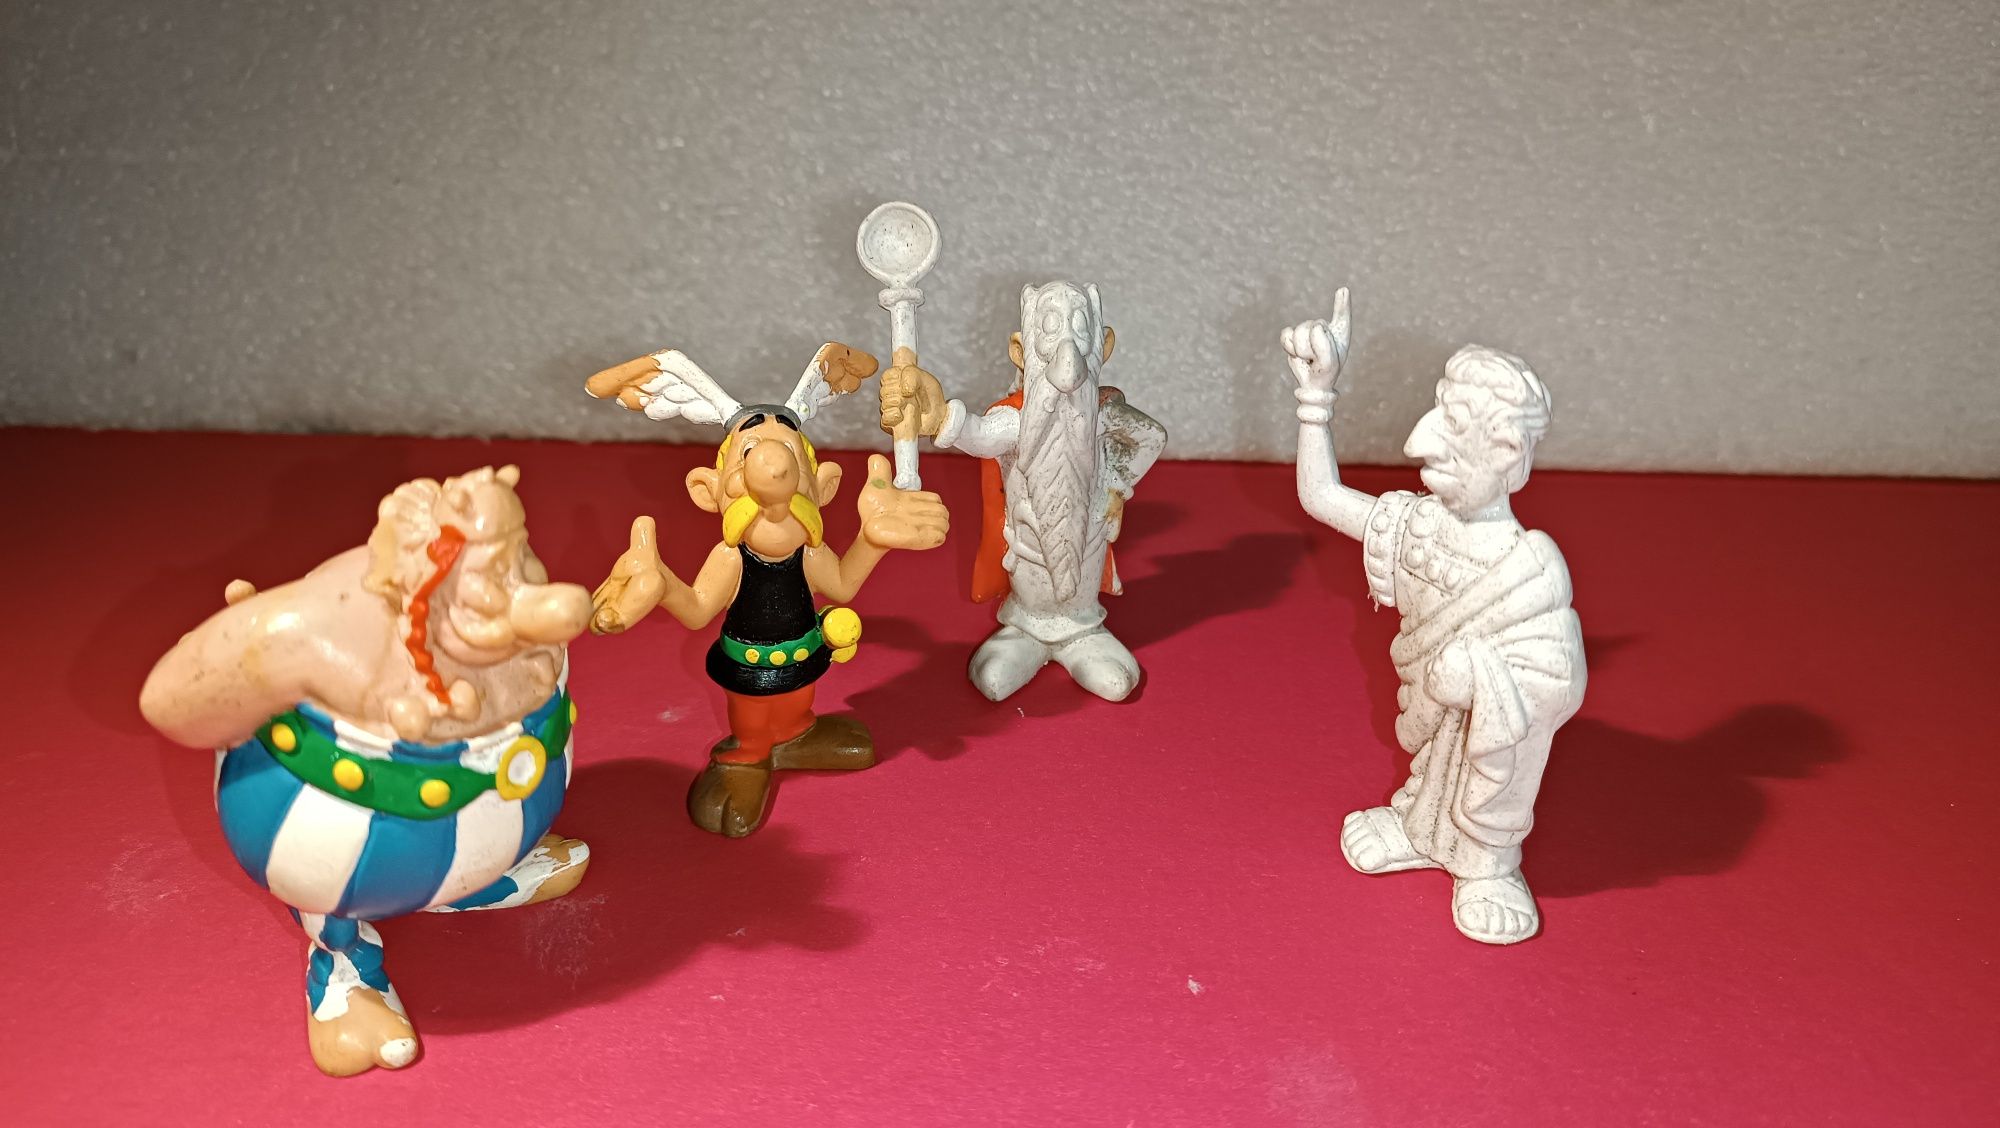 4 raras antigas figuras da uderzo Astérix e Obelix